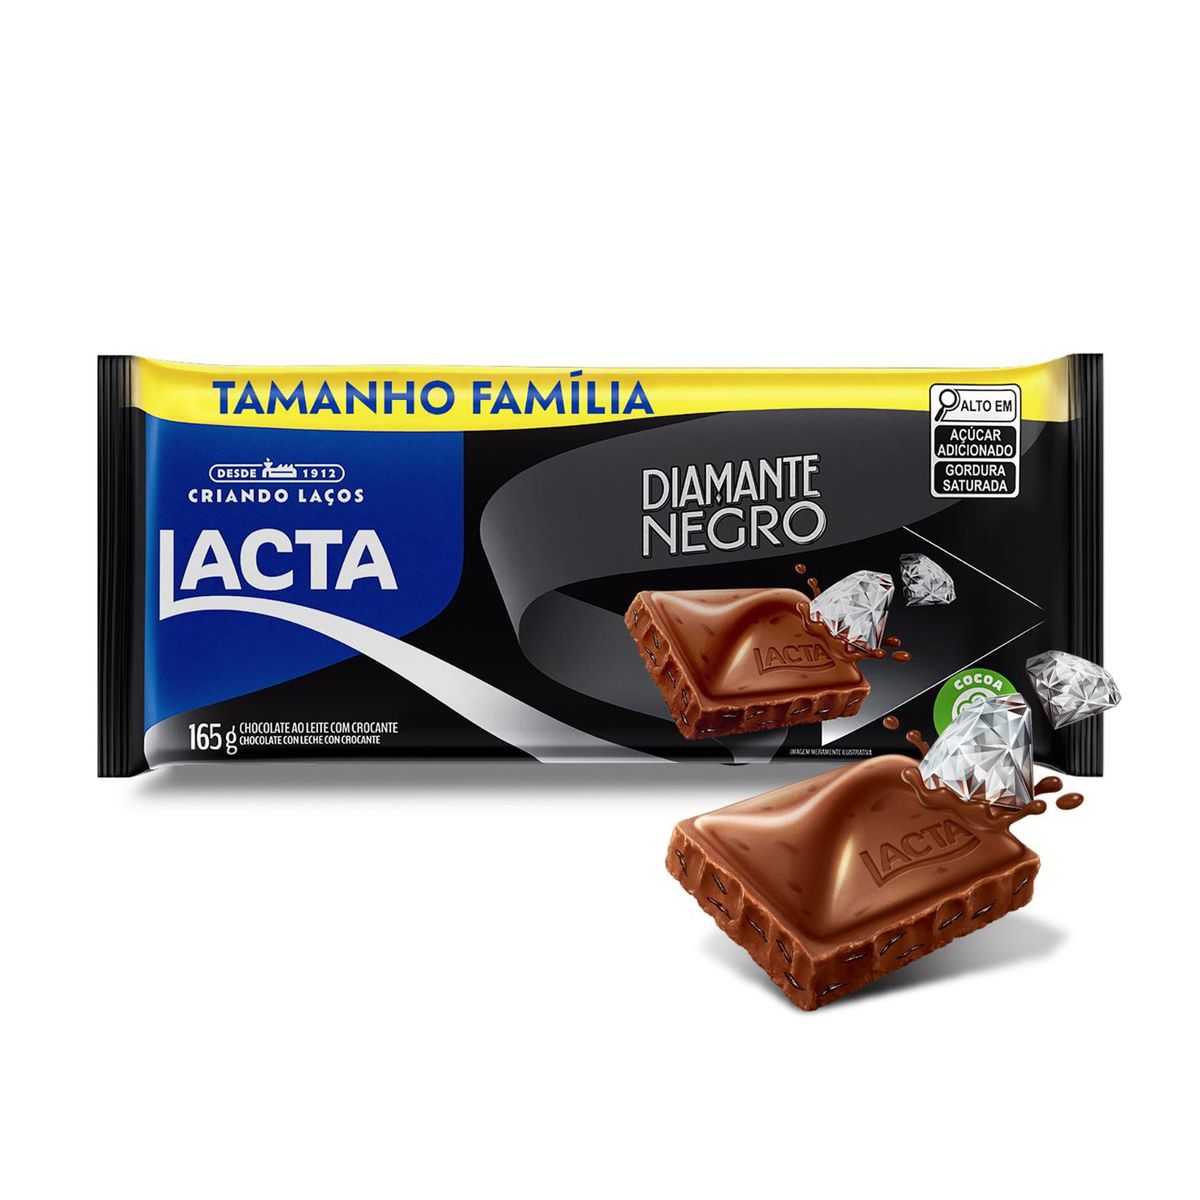 Chocolate Lacta Diamante Negro 165g Tamanho Família image number 0